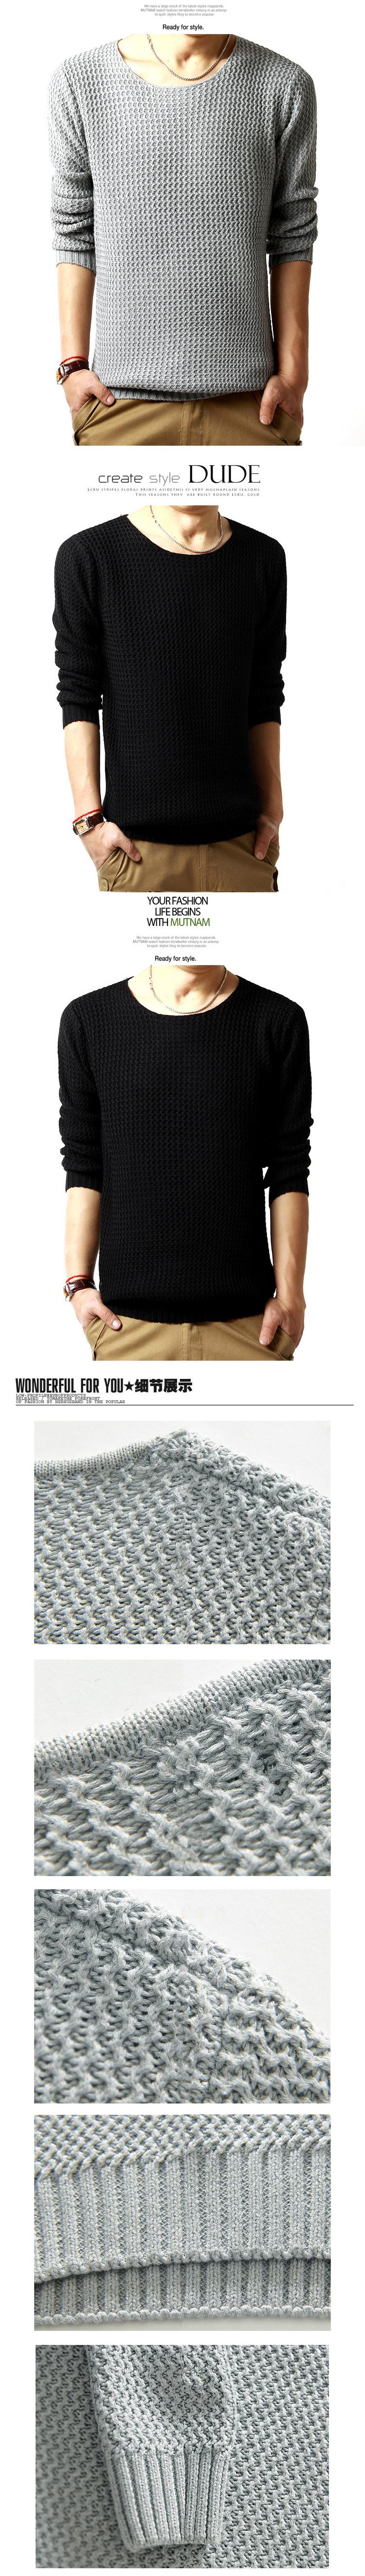 mssefn 2014新款 时尚新款圆领修身版粗针毛衣潮韩版针织衫2111-8034